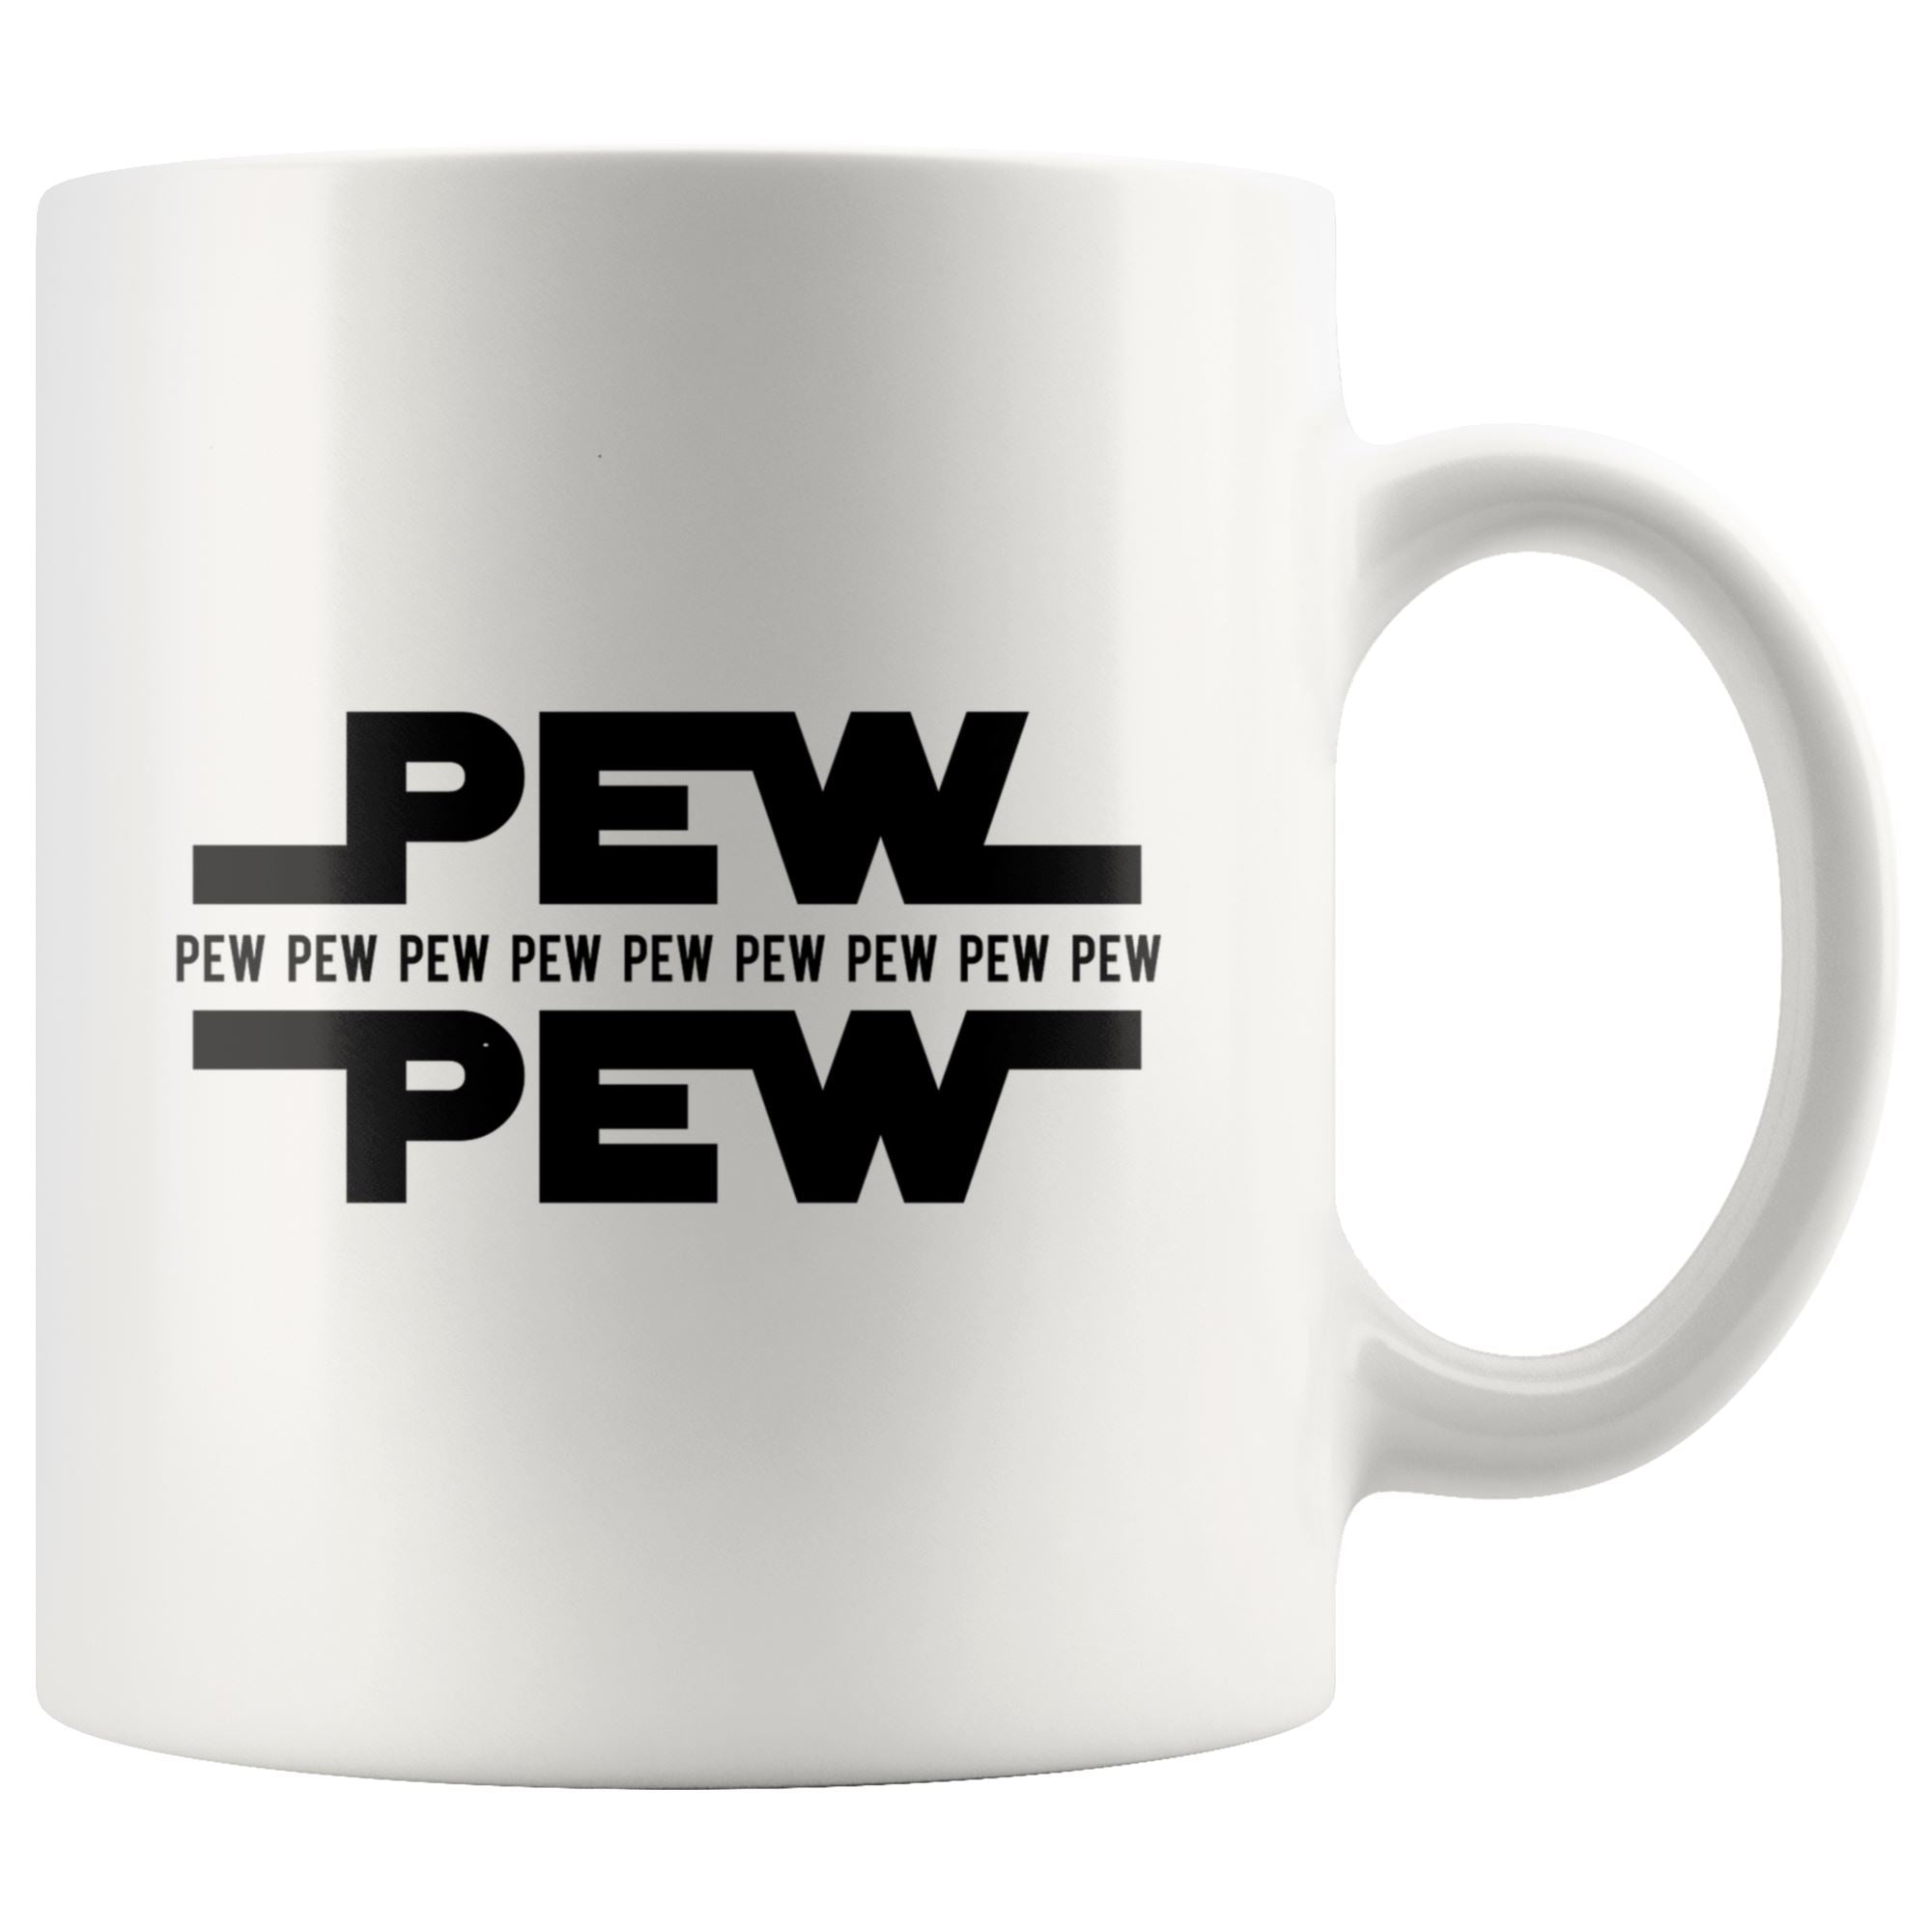 Pew Pew Drinkware teelaunch 11oz Mug 